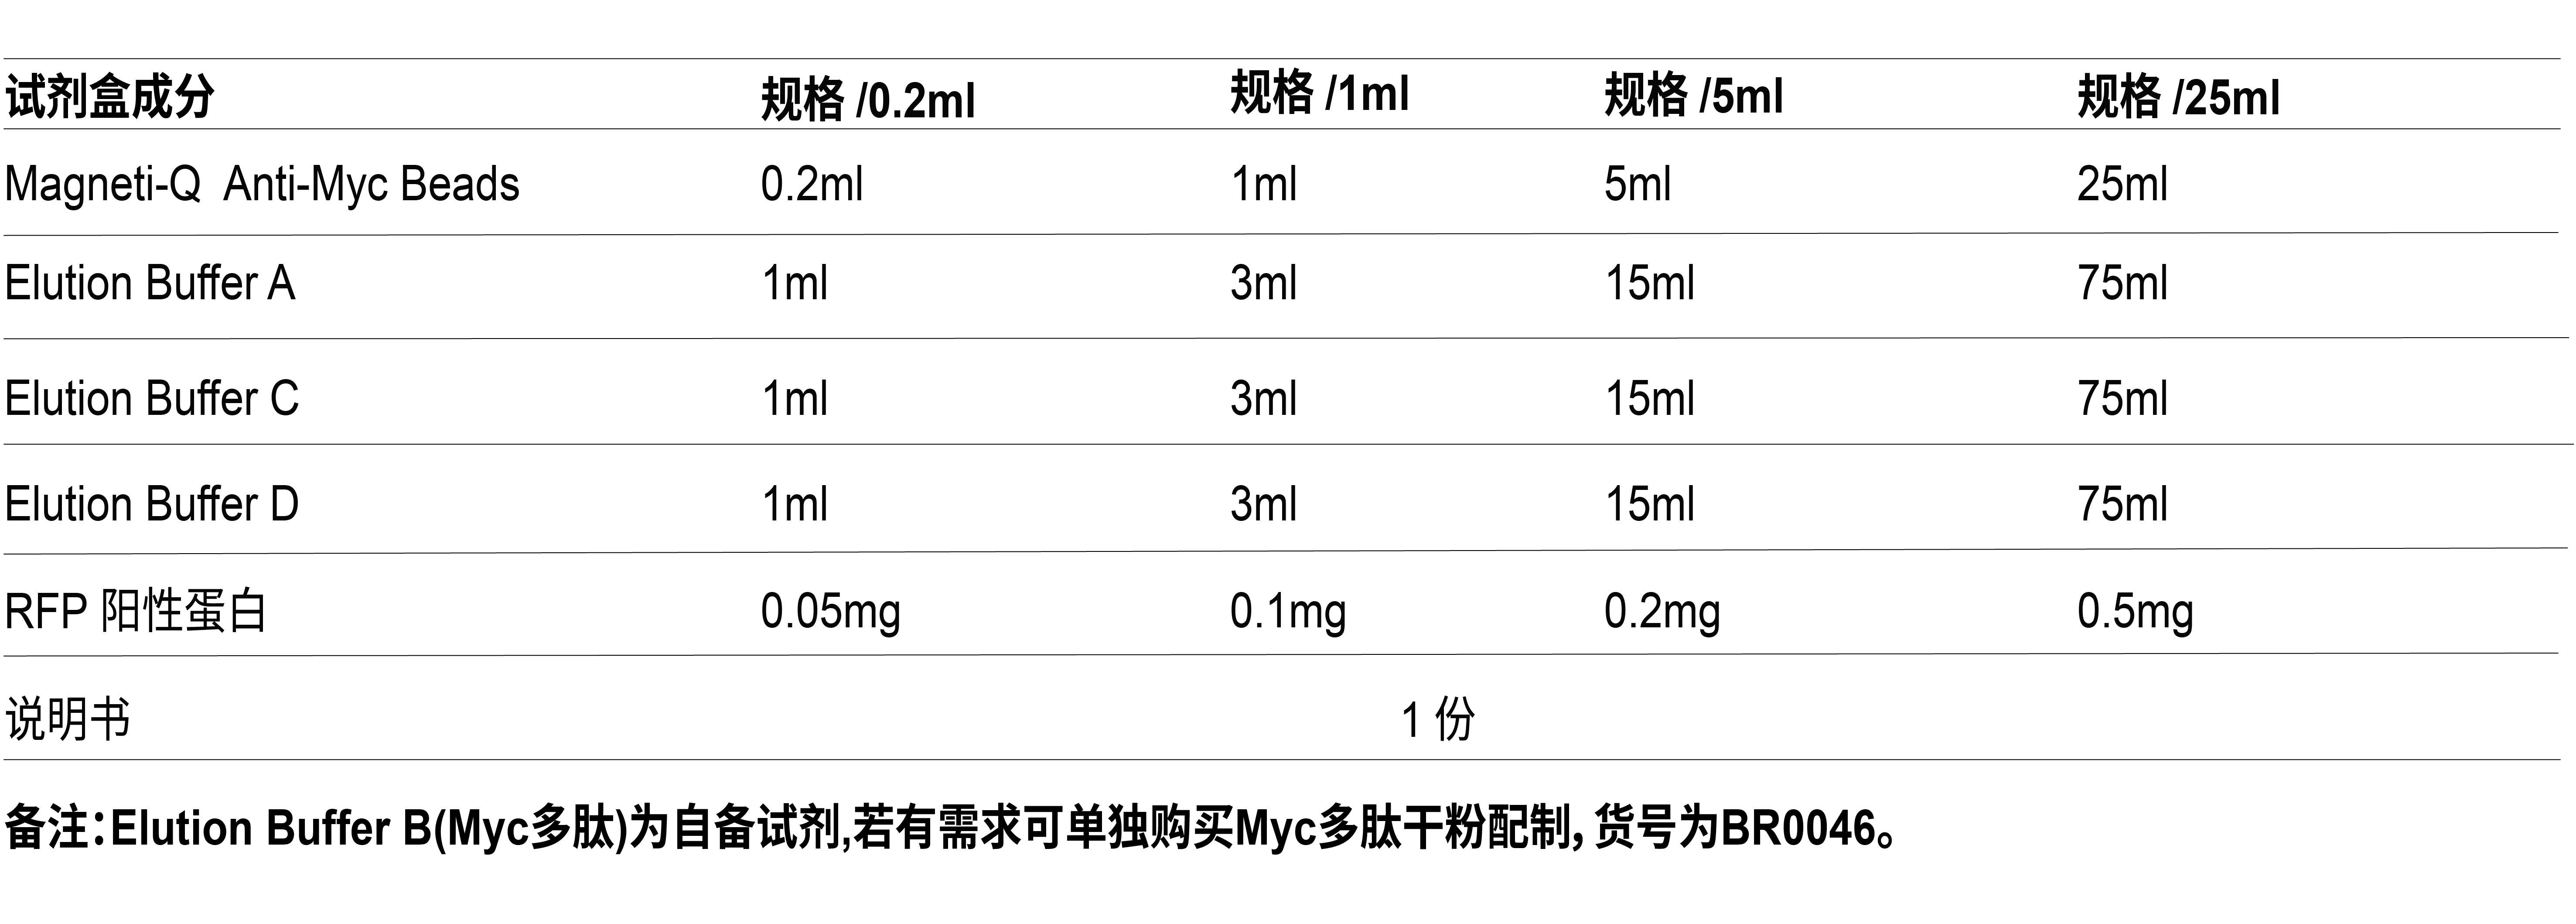 Magneti-Q Myc 标签蛋白纯化试剂盒插图